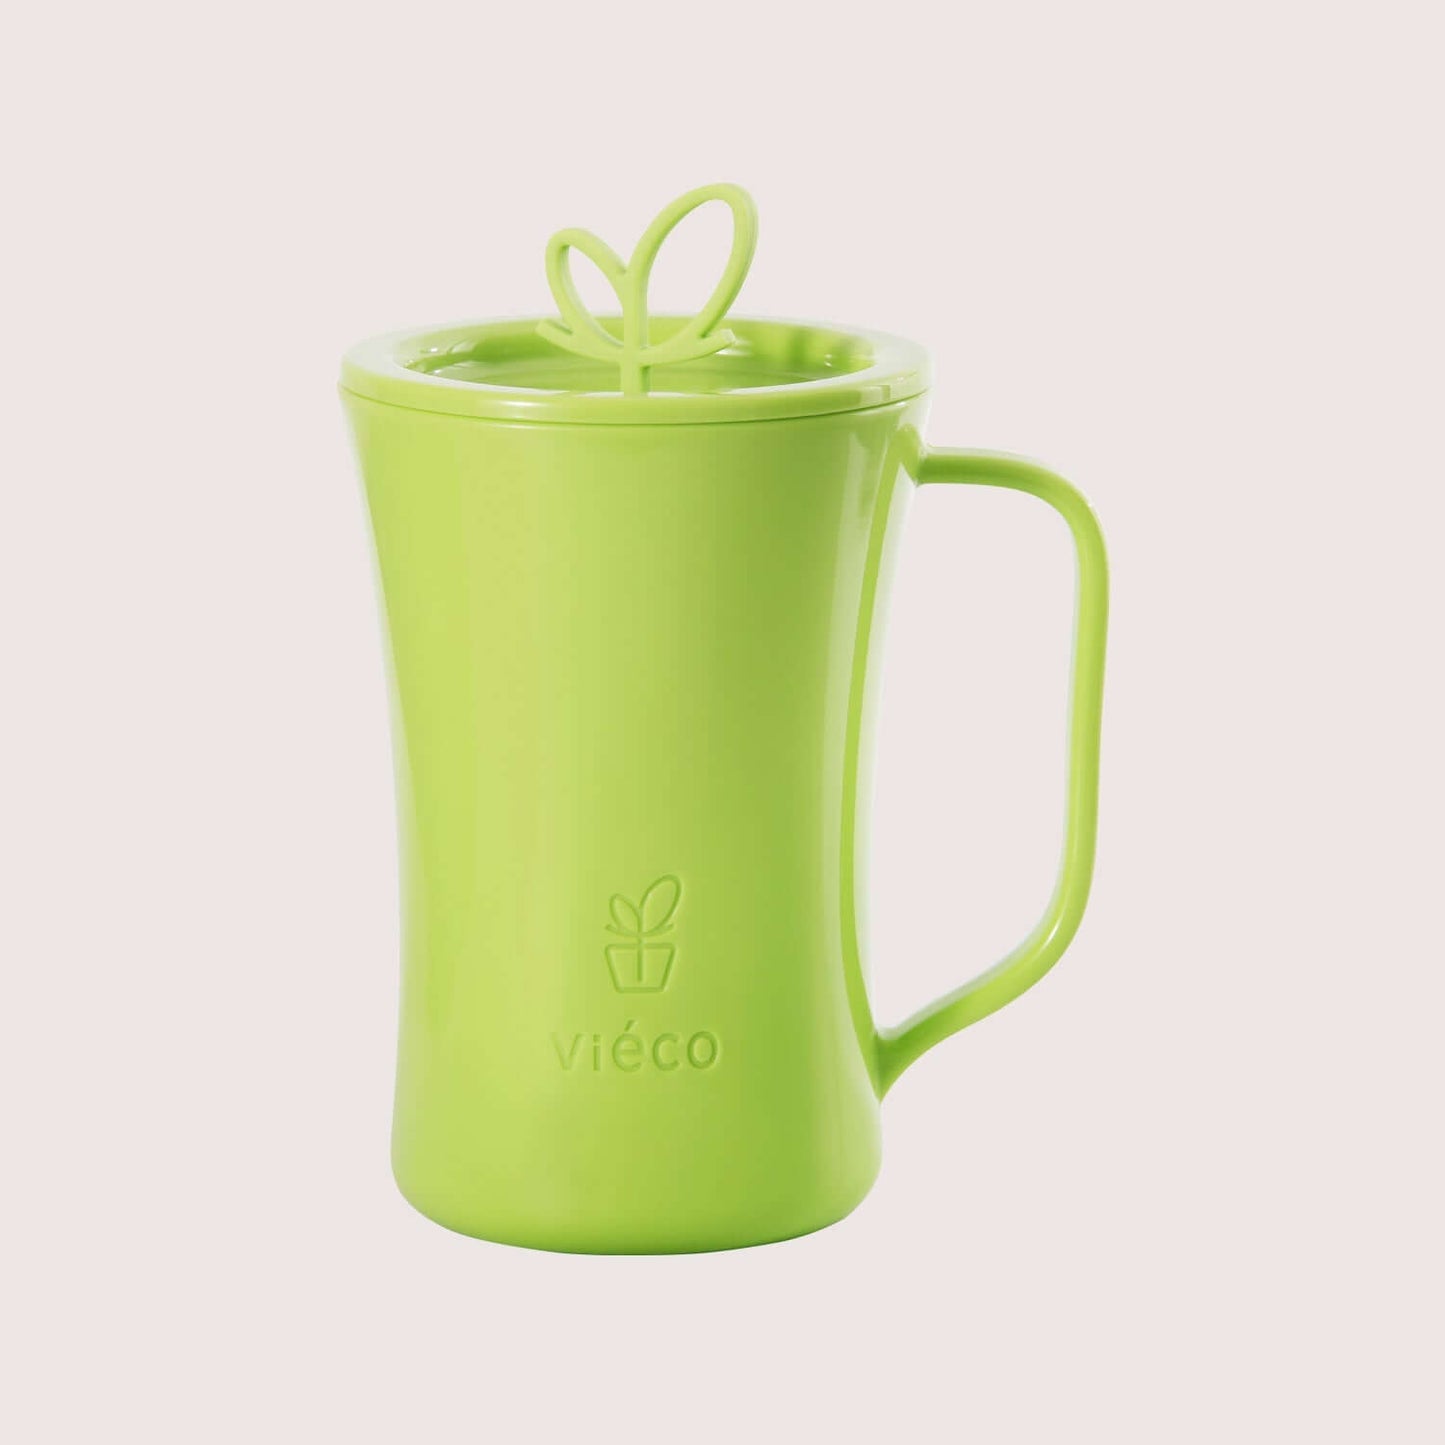 Vieco Eco-friendly PLA Coffee Mug with Lid and Handle_Green